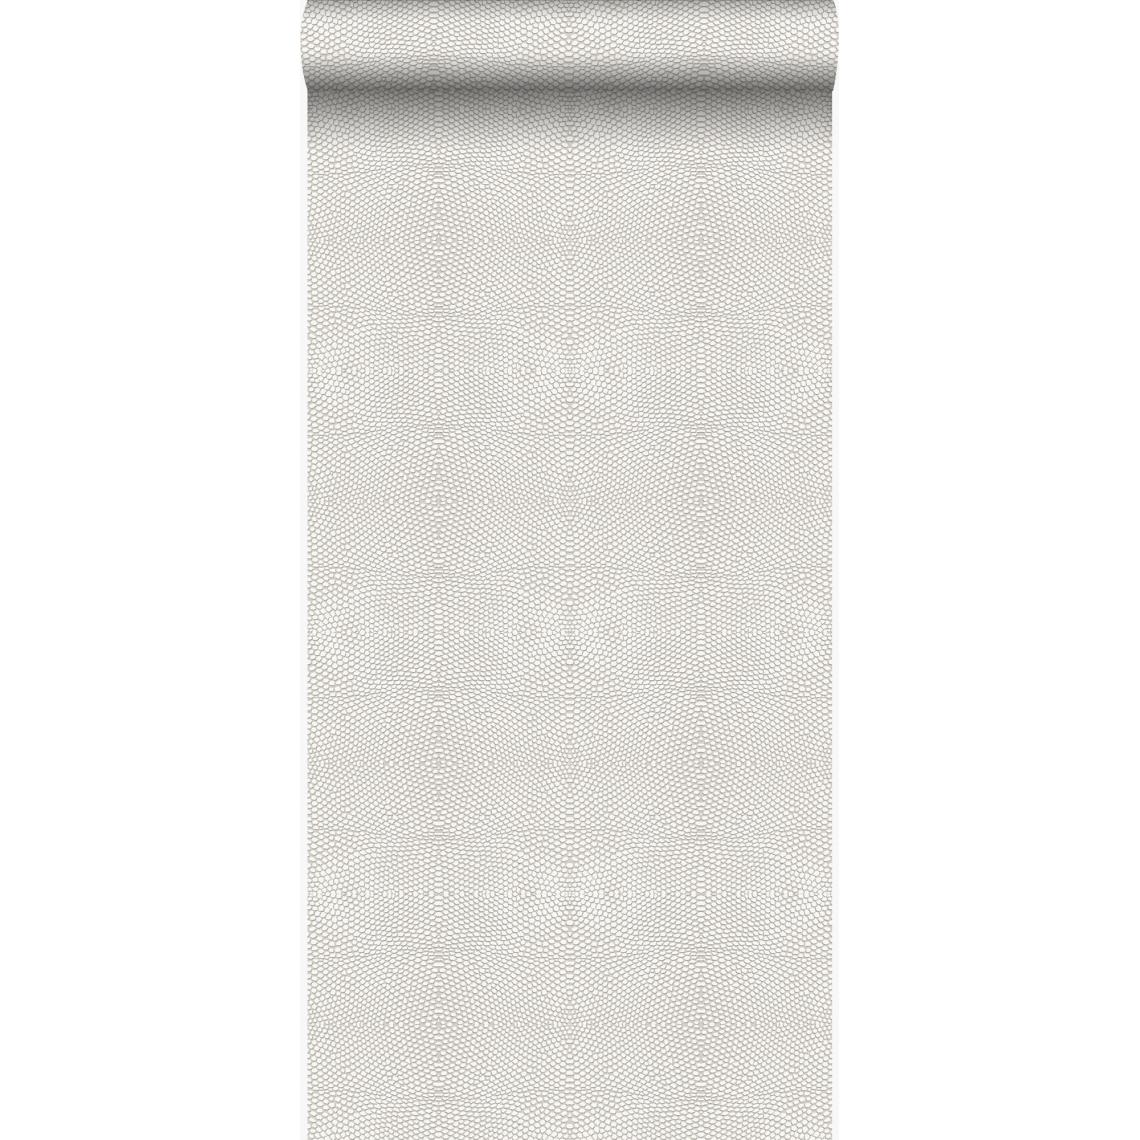 Origin - Origin papier peint peau d'animal beige - 347309 - 53 cm x 10,05 m - Papier peint